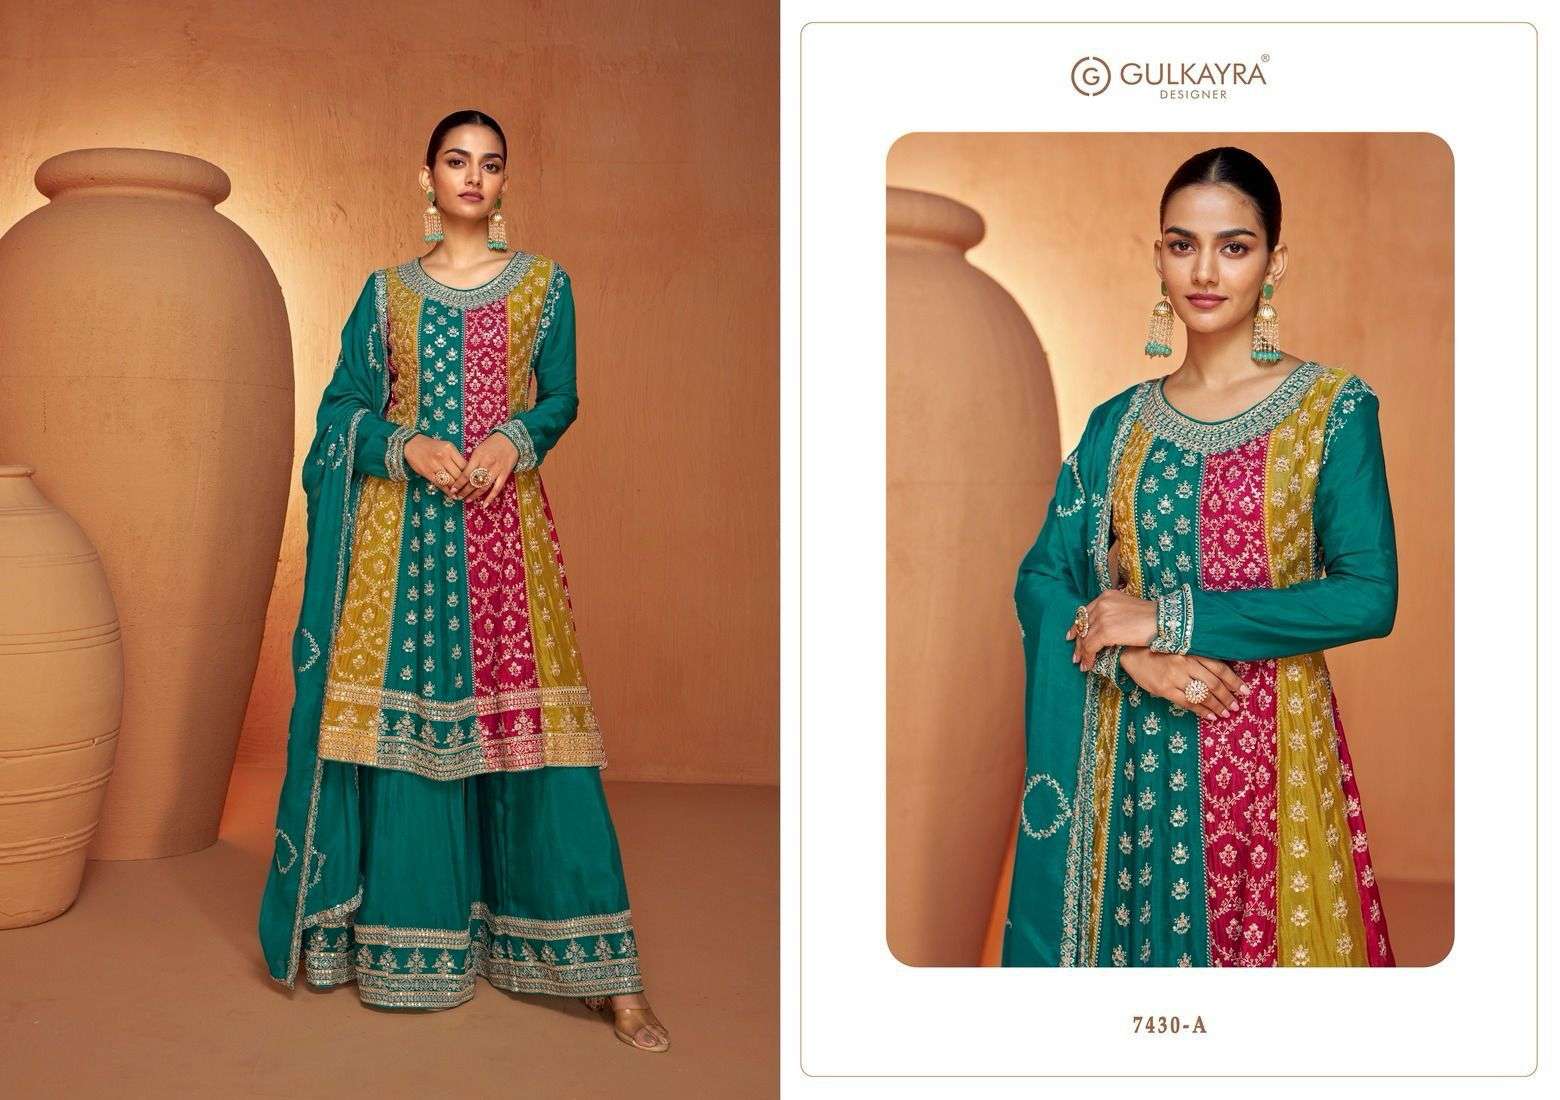 gulkayra designer ruhi 7430 colour series designer sharara salwar kameez wholesaler surat gujarat